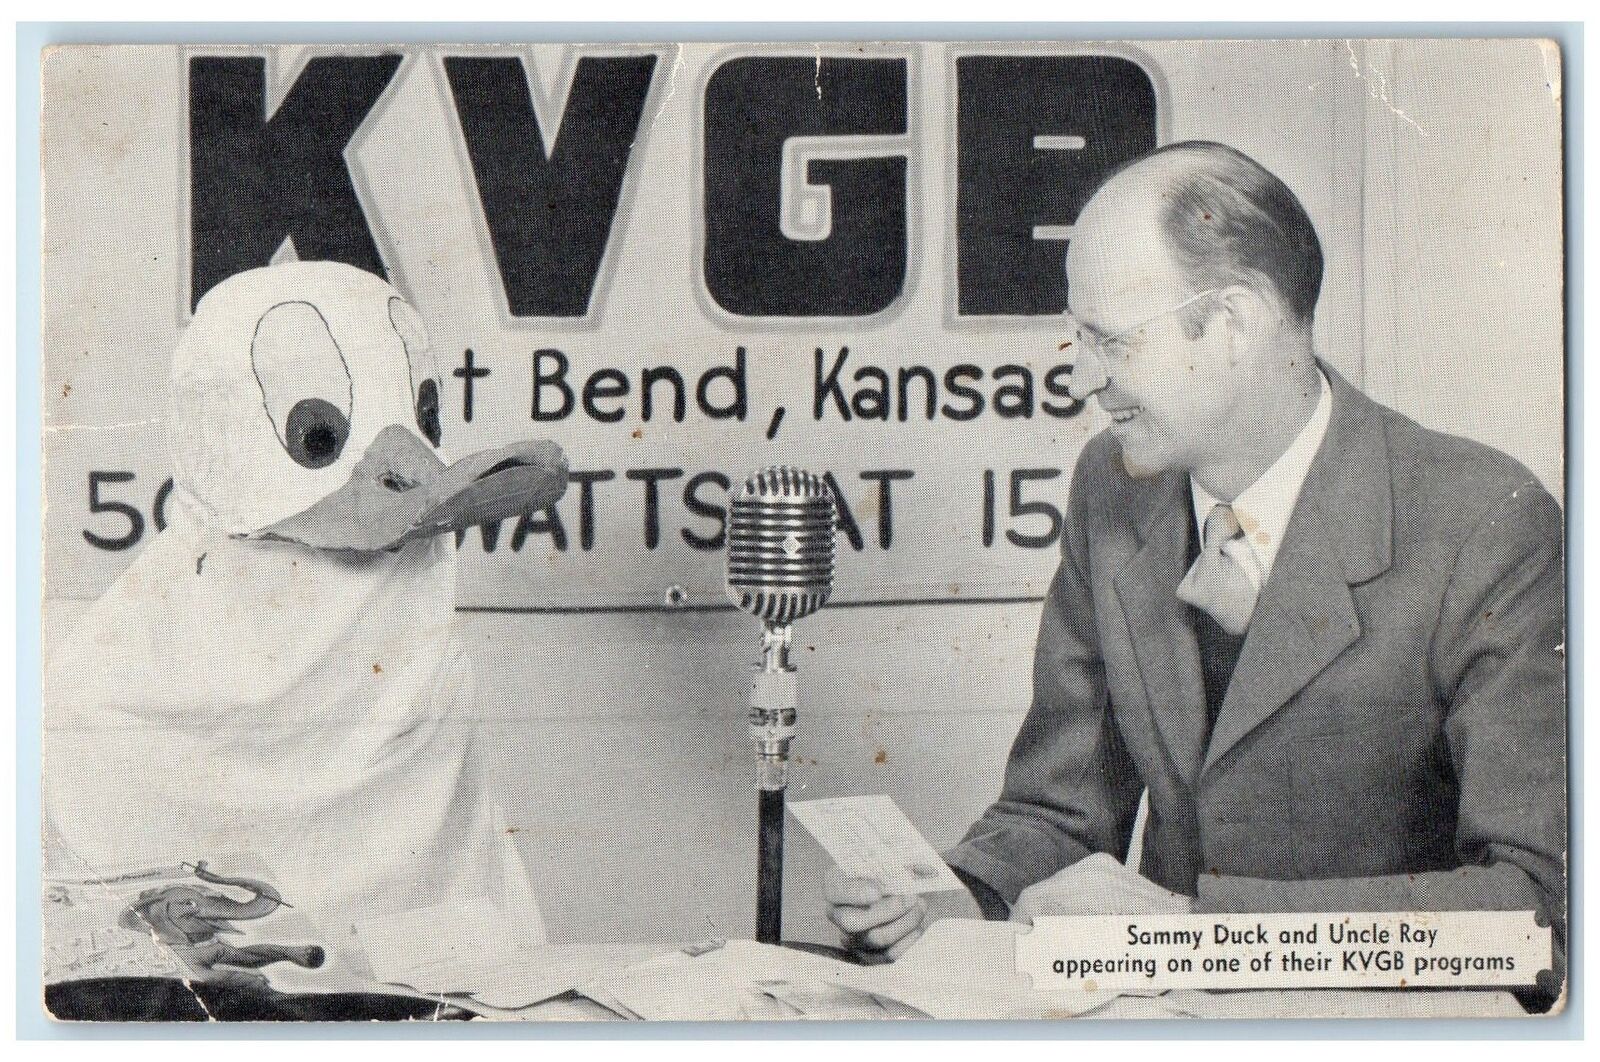 c1960's Sammy Duck And Uncle Ray KVGB Programs Great Bend Kansas KS Postcard